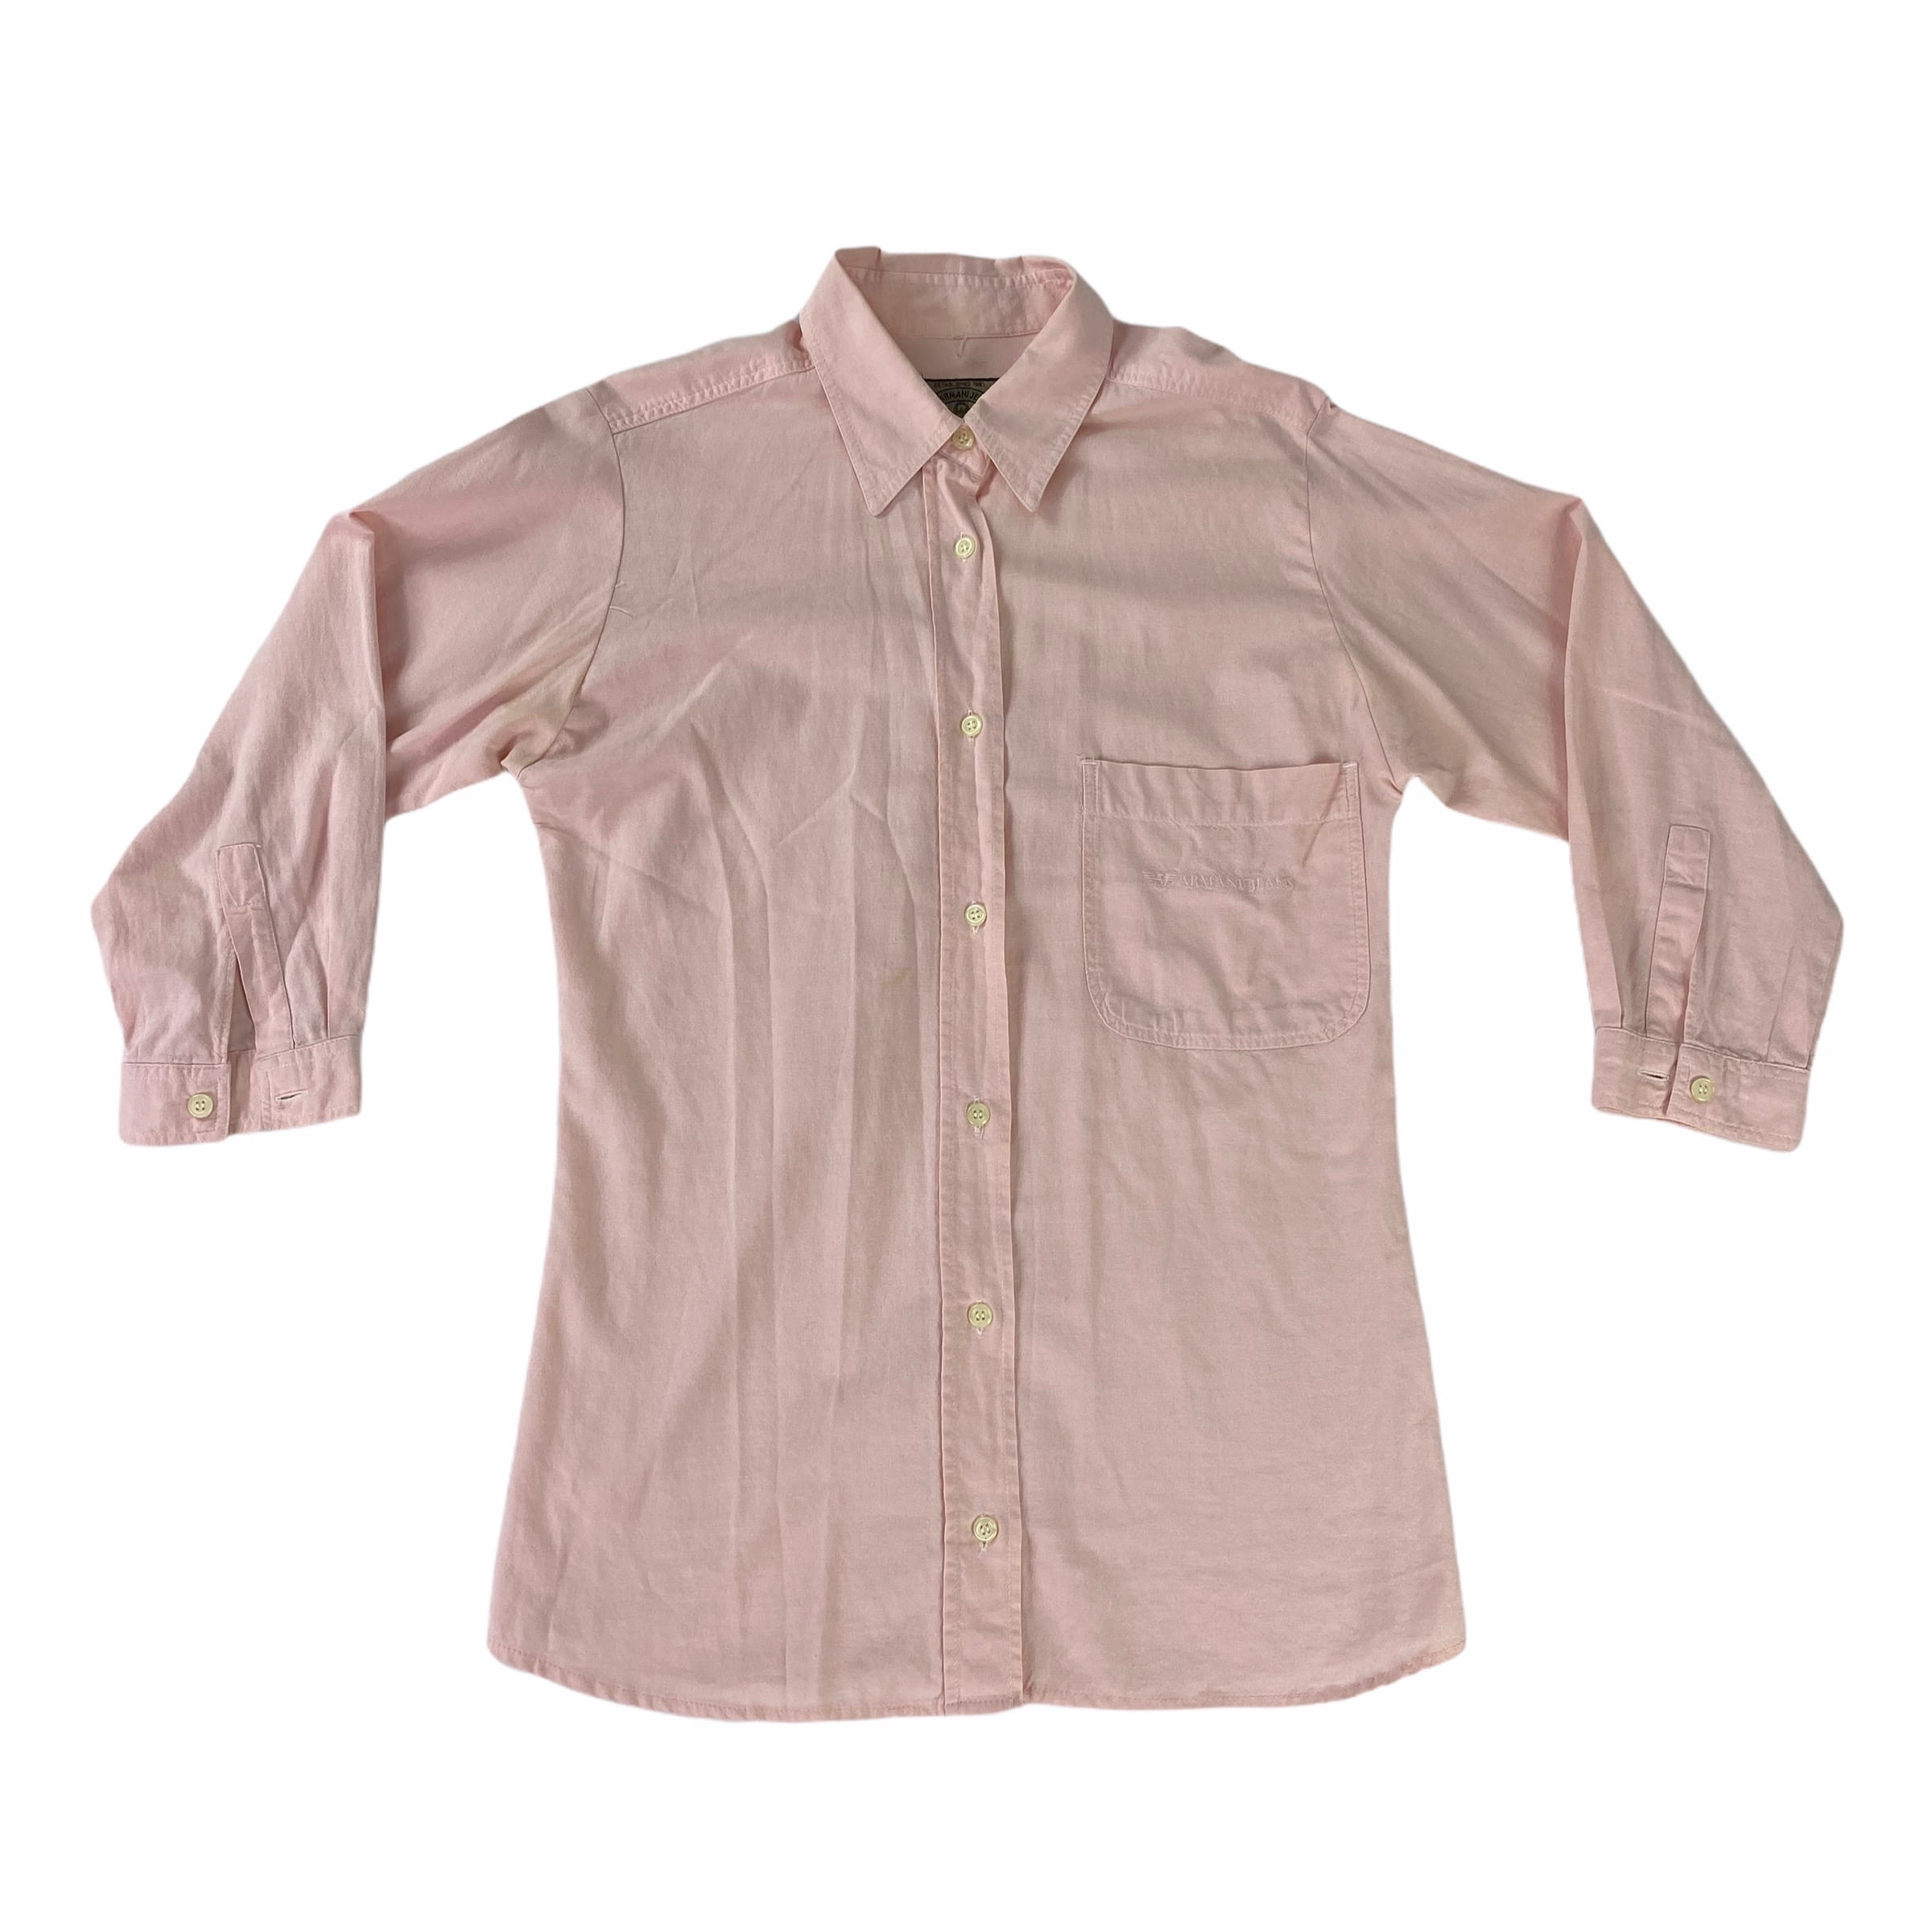 [Armani Jeans] Pink Shirt - Size M